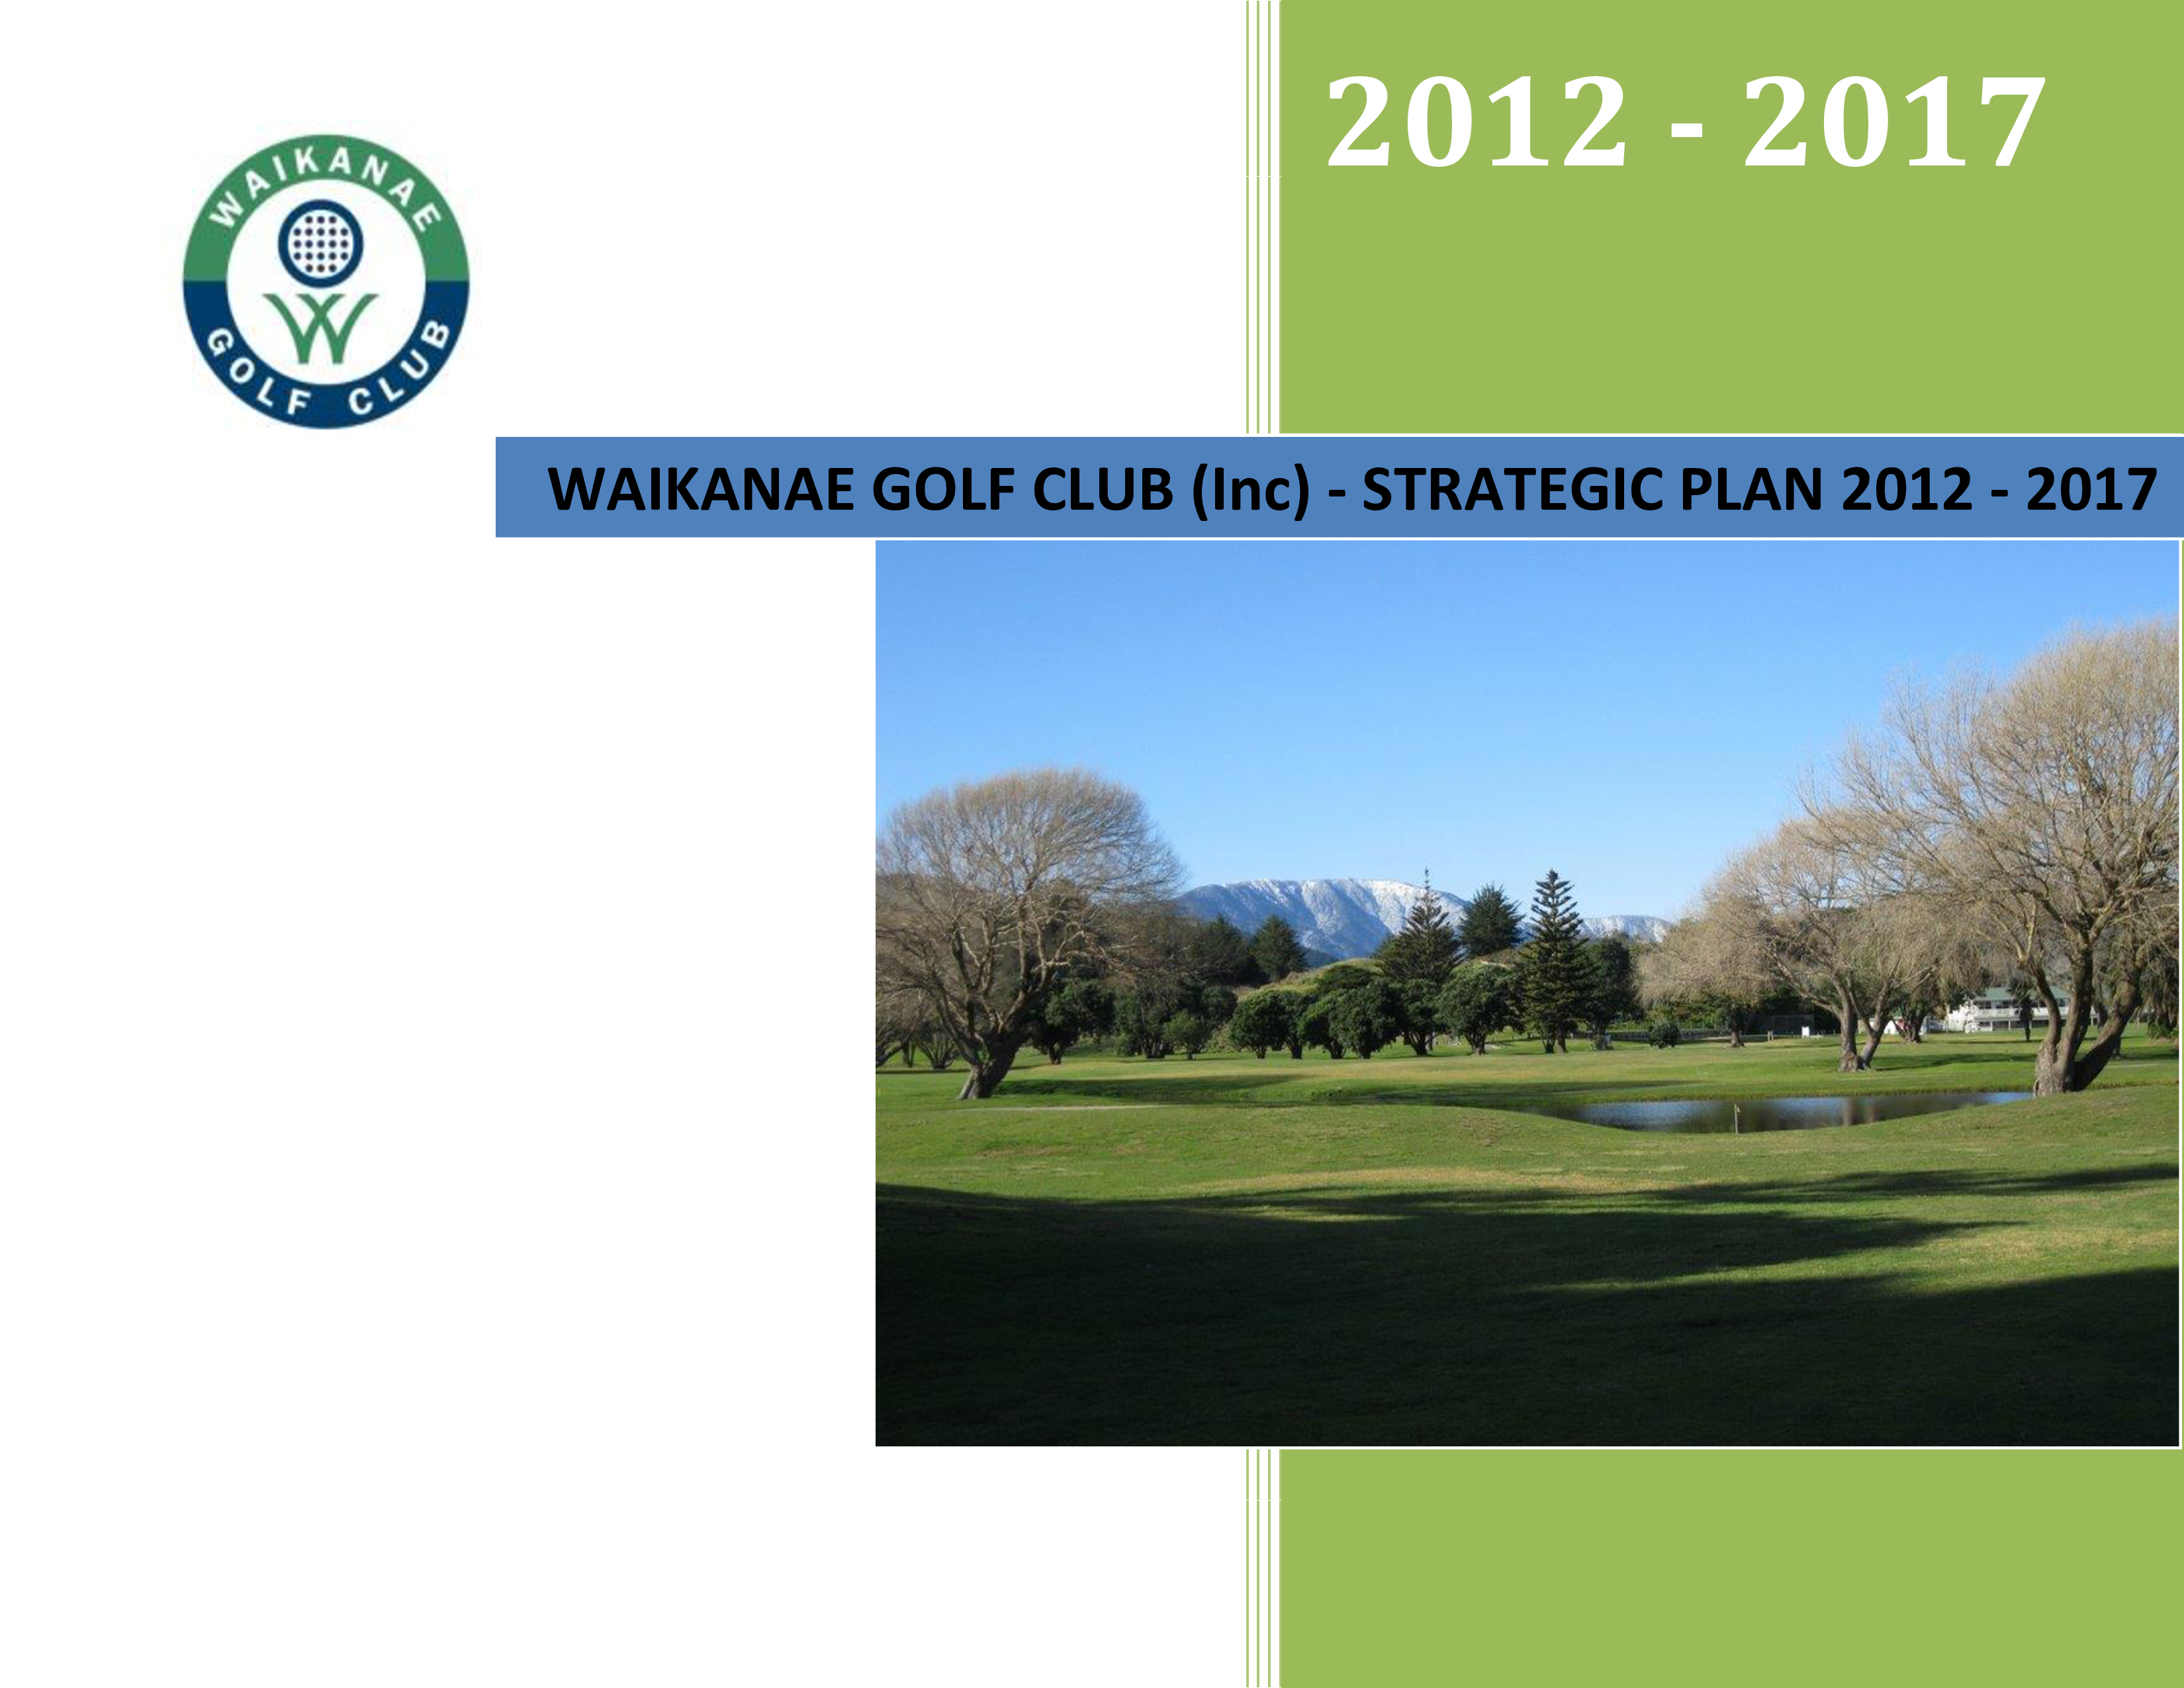 golf-club-strategic-marketing-plan-templates-at-allbusinesstemplates